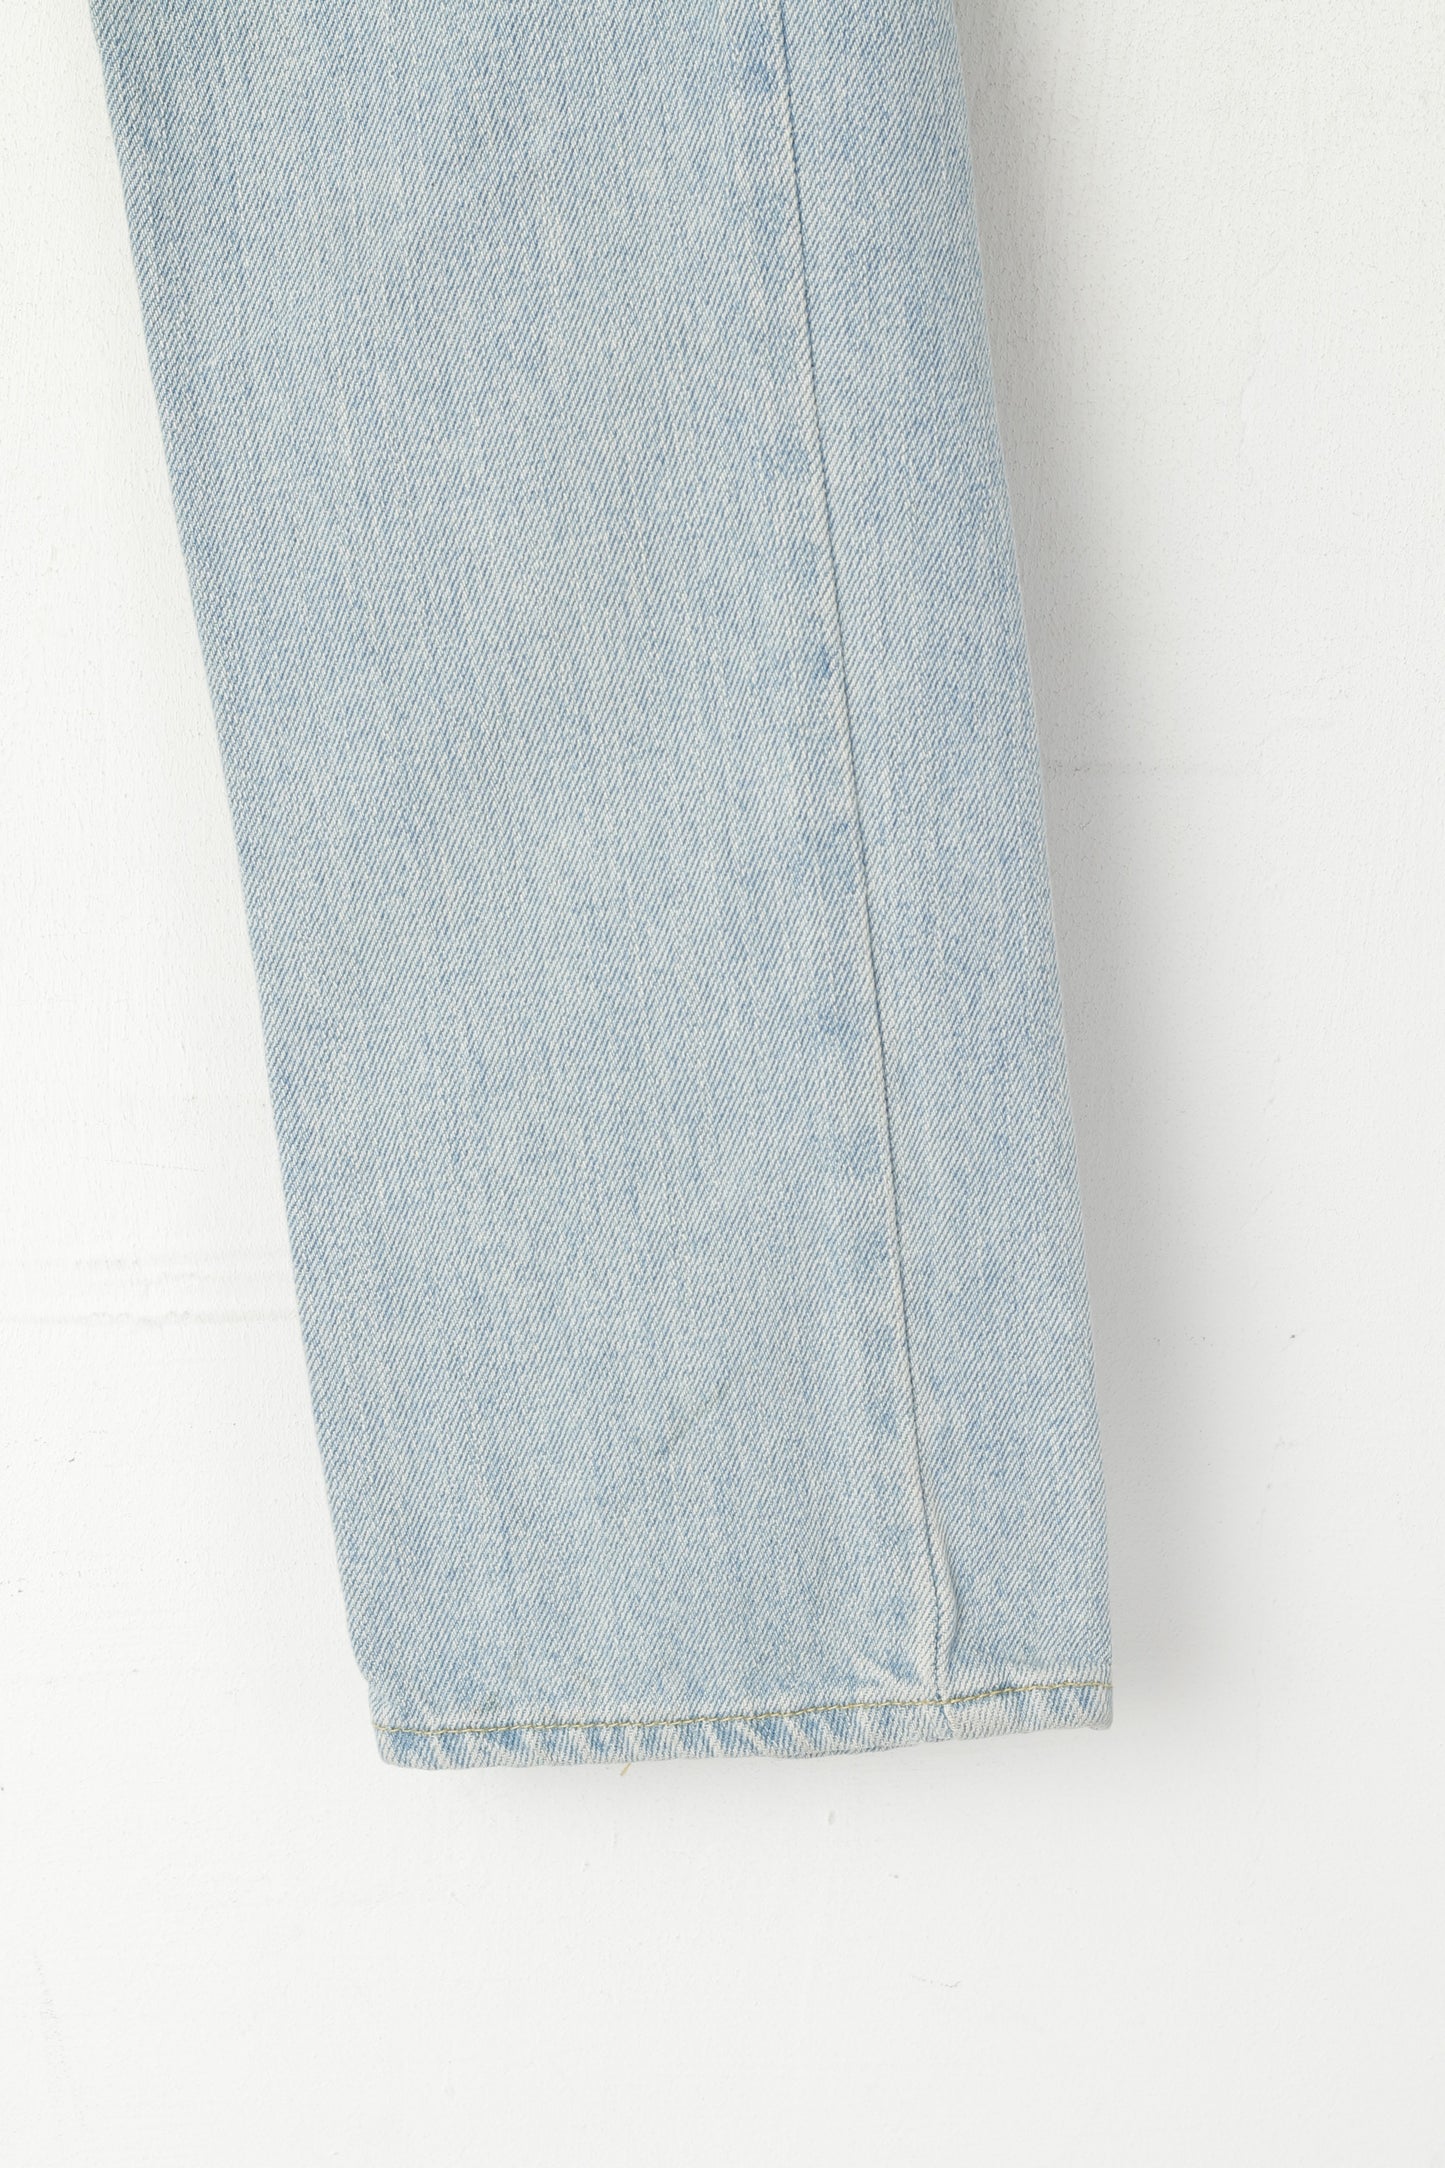 Hollister Women 28 Jeans Trousers Light Blue Cotton Denim Straight Leg Skinny Pants